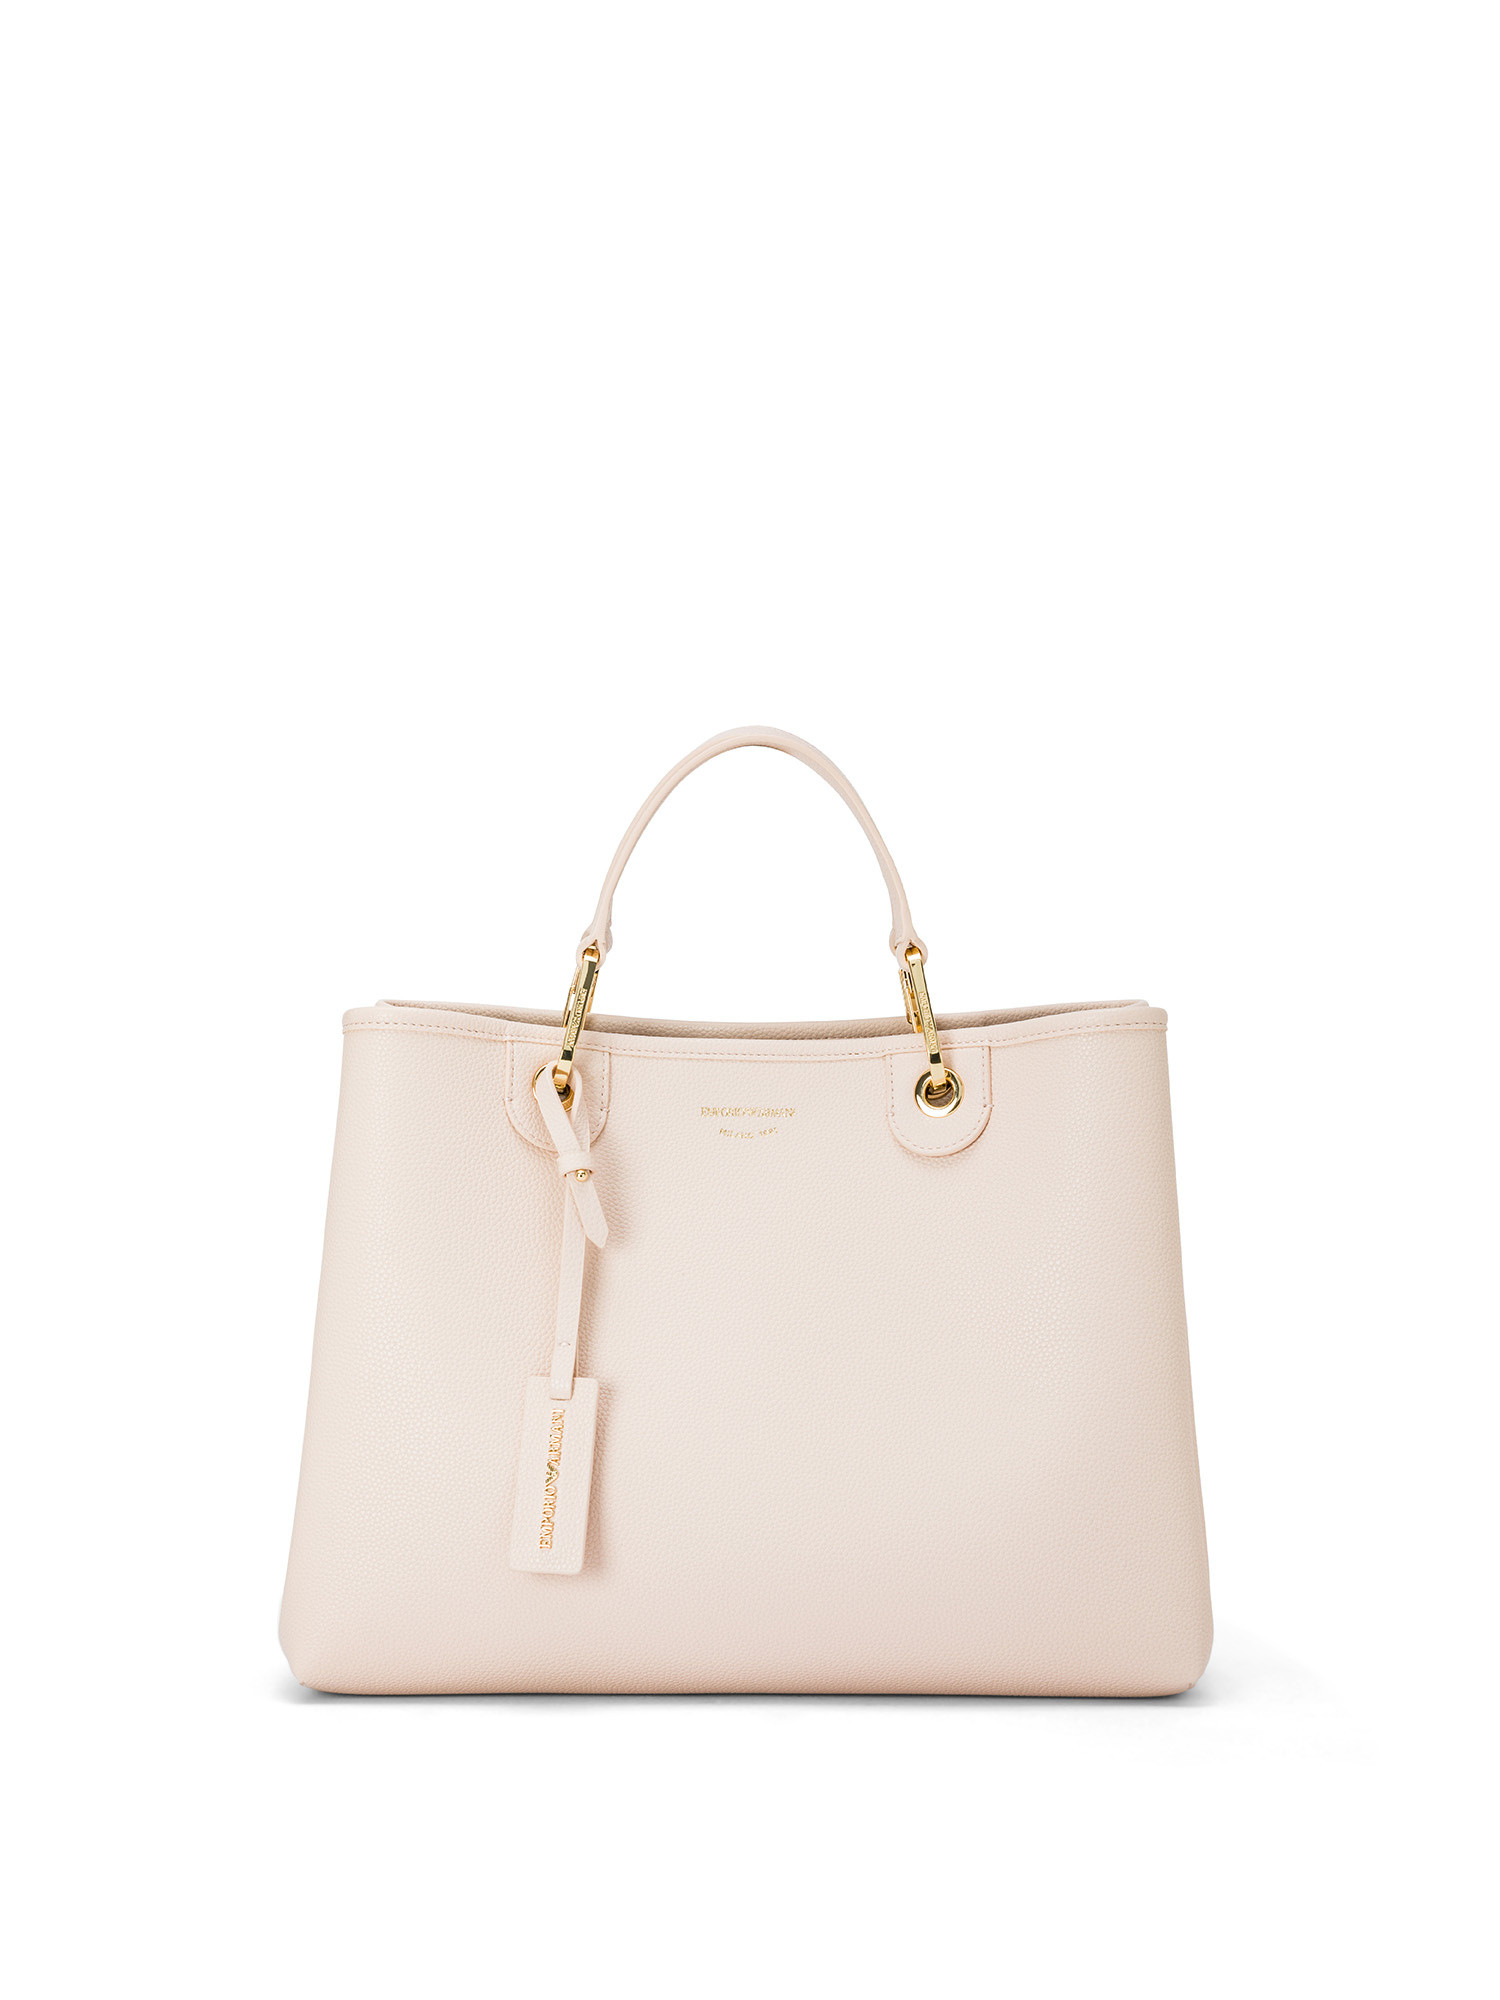 Emporio Armani - Deer print medium handbag, Powder Pink, large image number 0